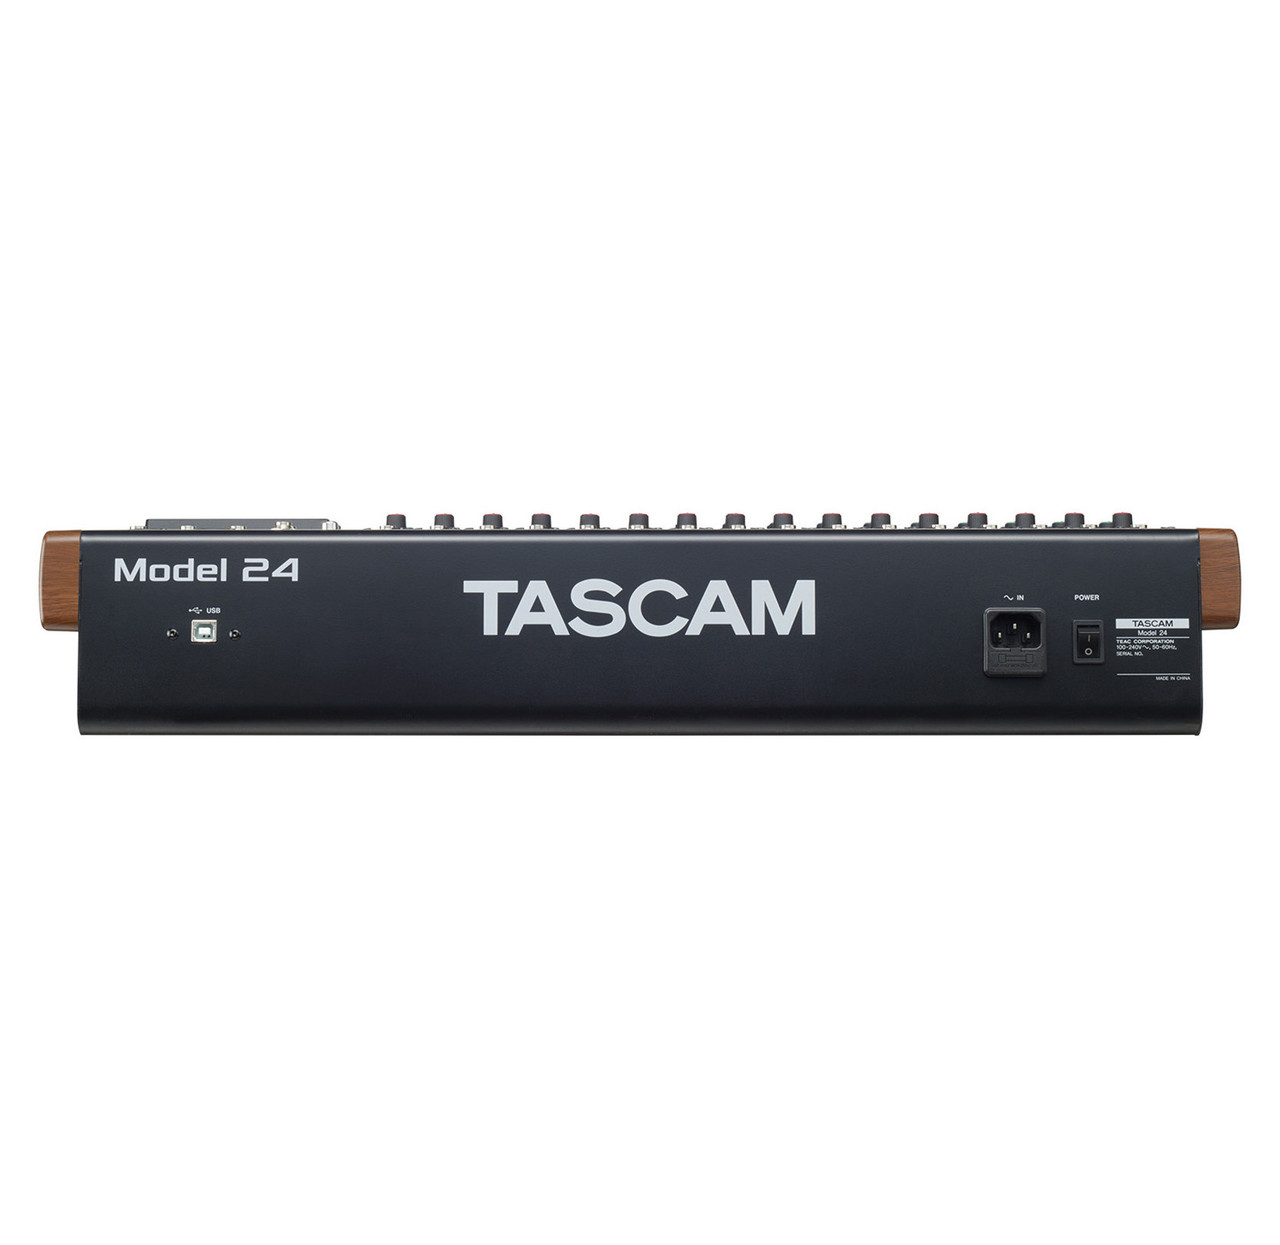 TASCAM Model 24 24-Channel Multitrack Recording Mixer - Sound 